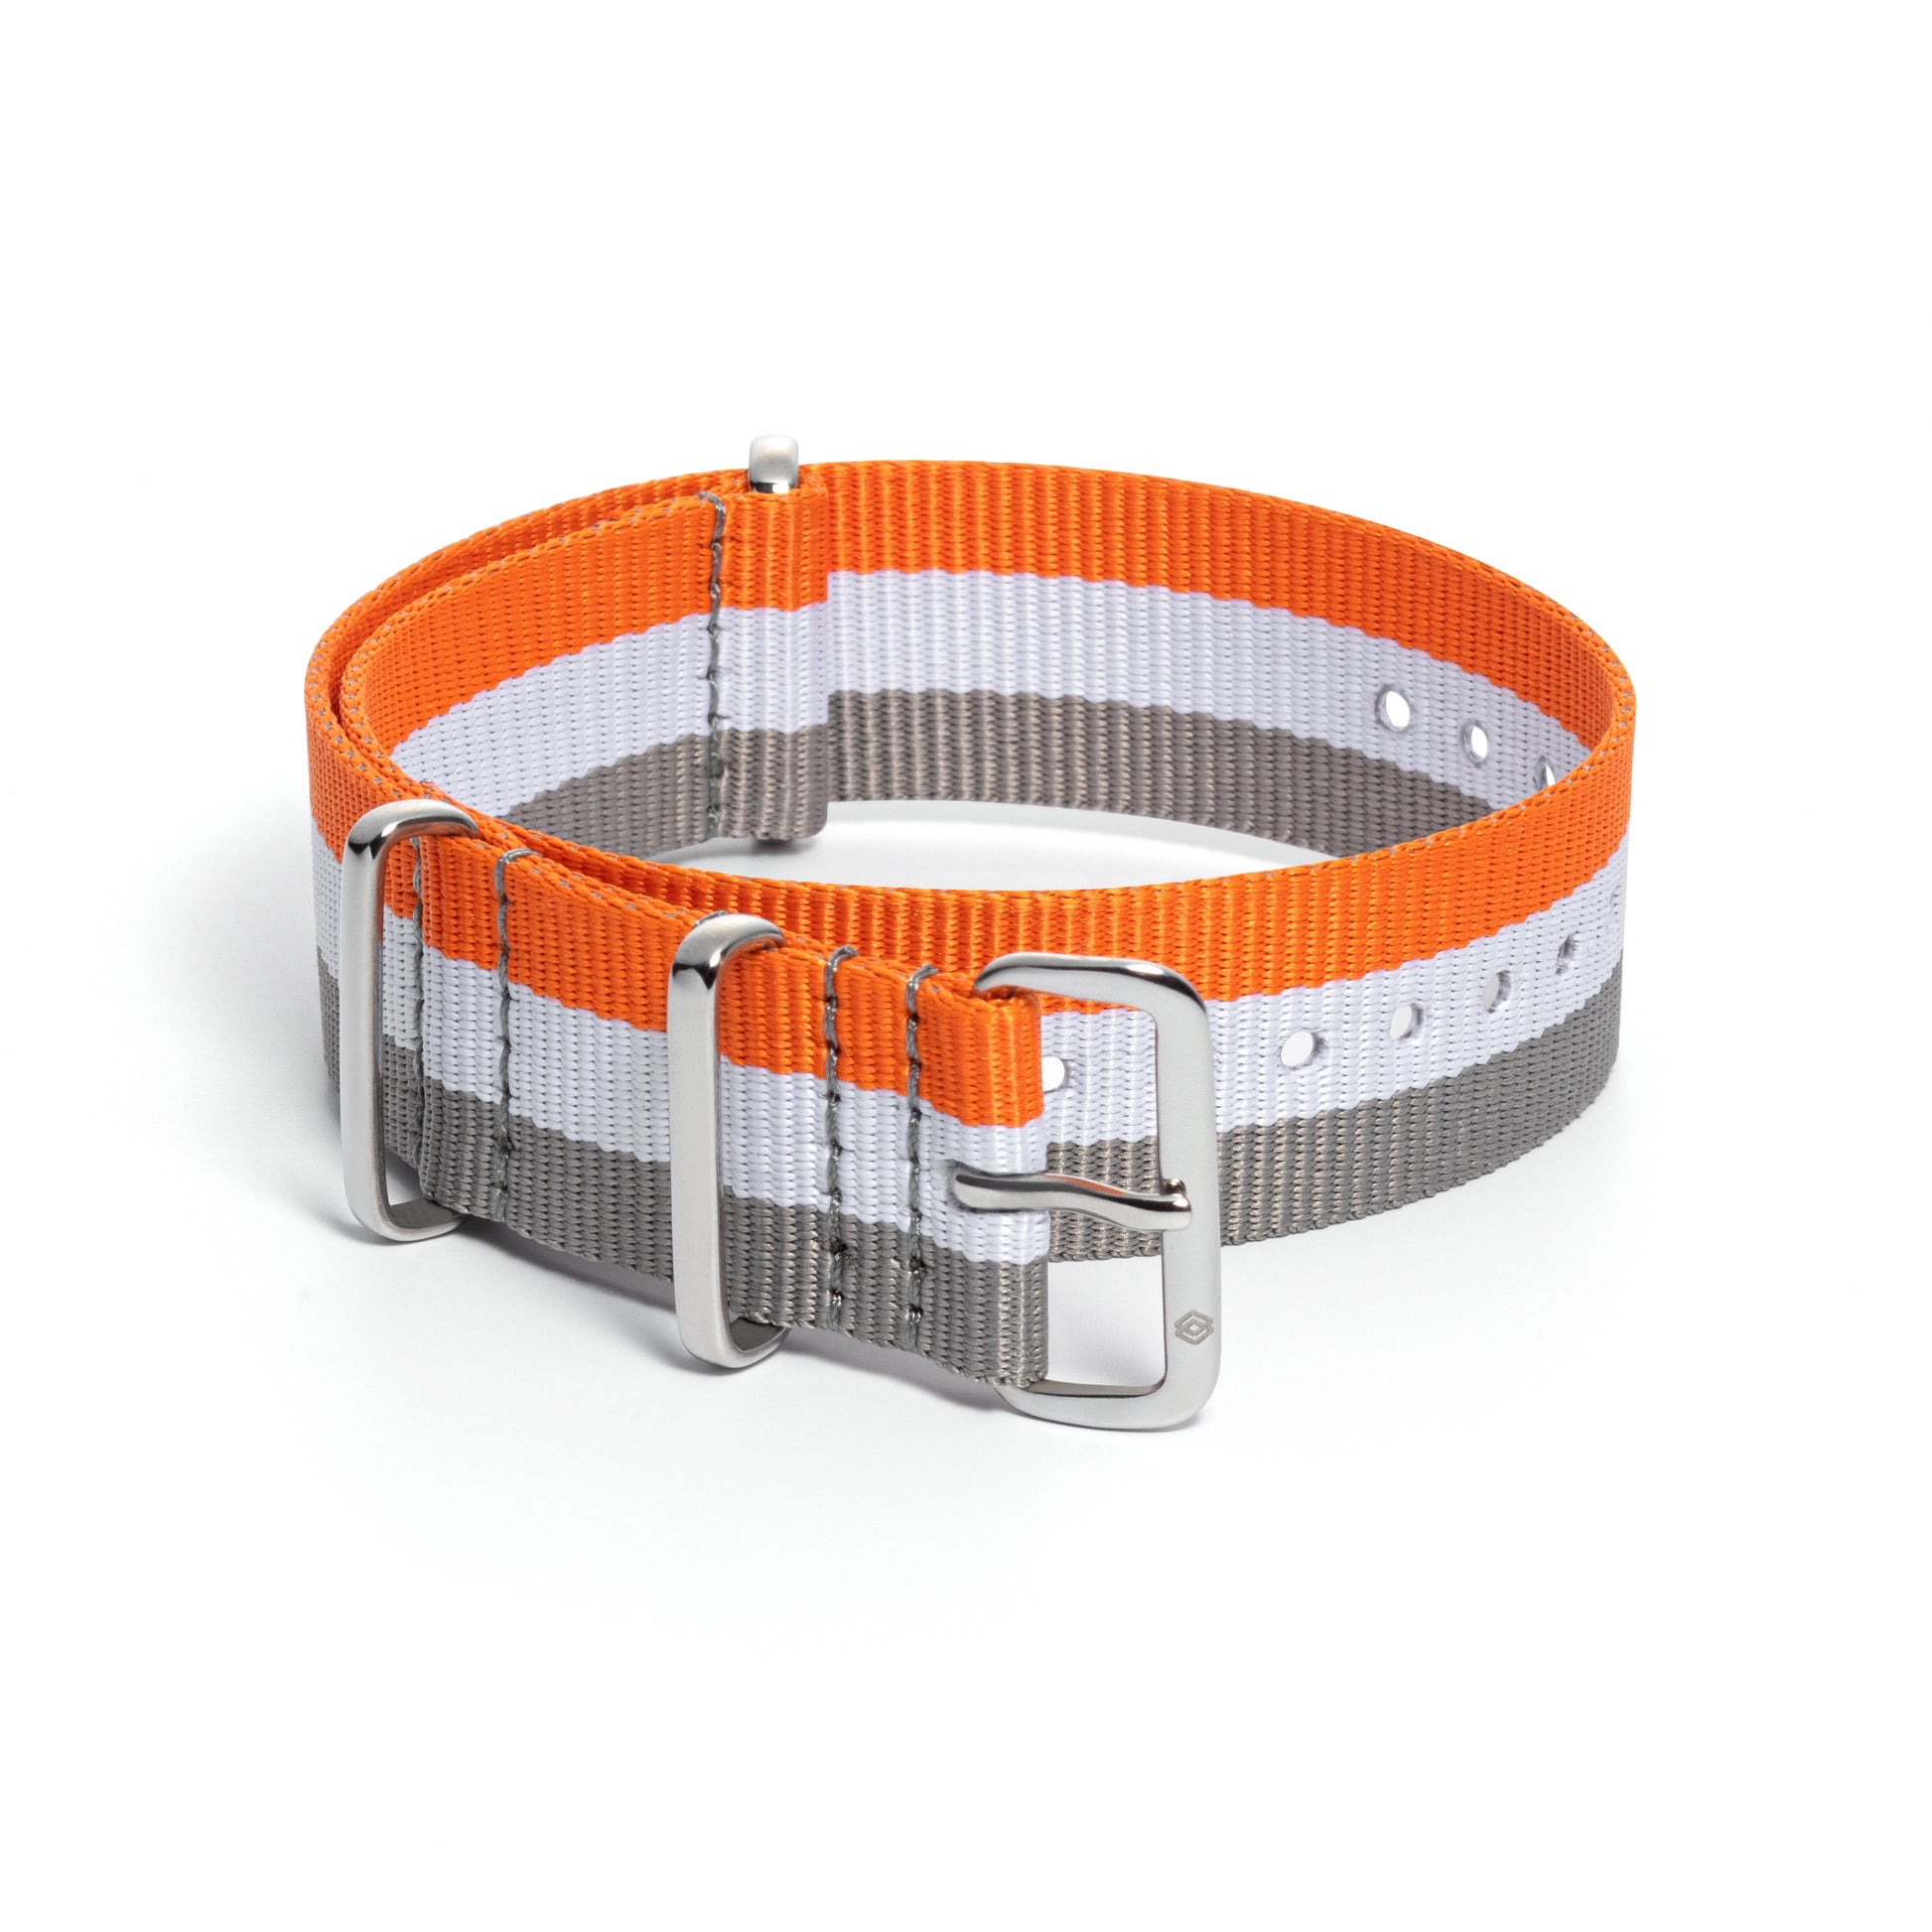 BWG-Bavarian-watch-textile-NATO-strap-striped-grey-orange-white-open-sky-20mm